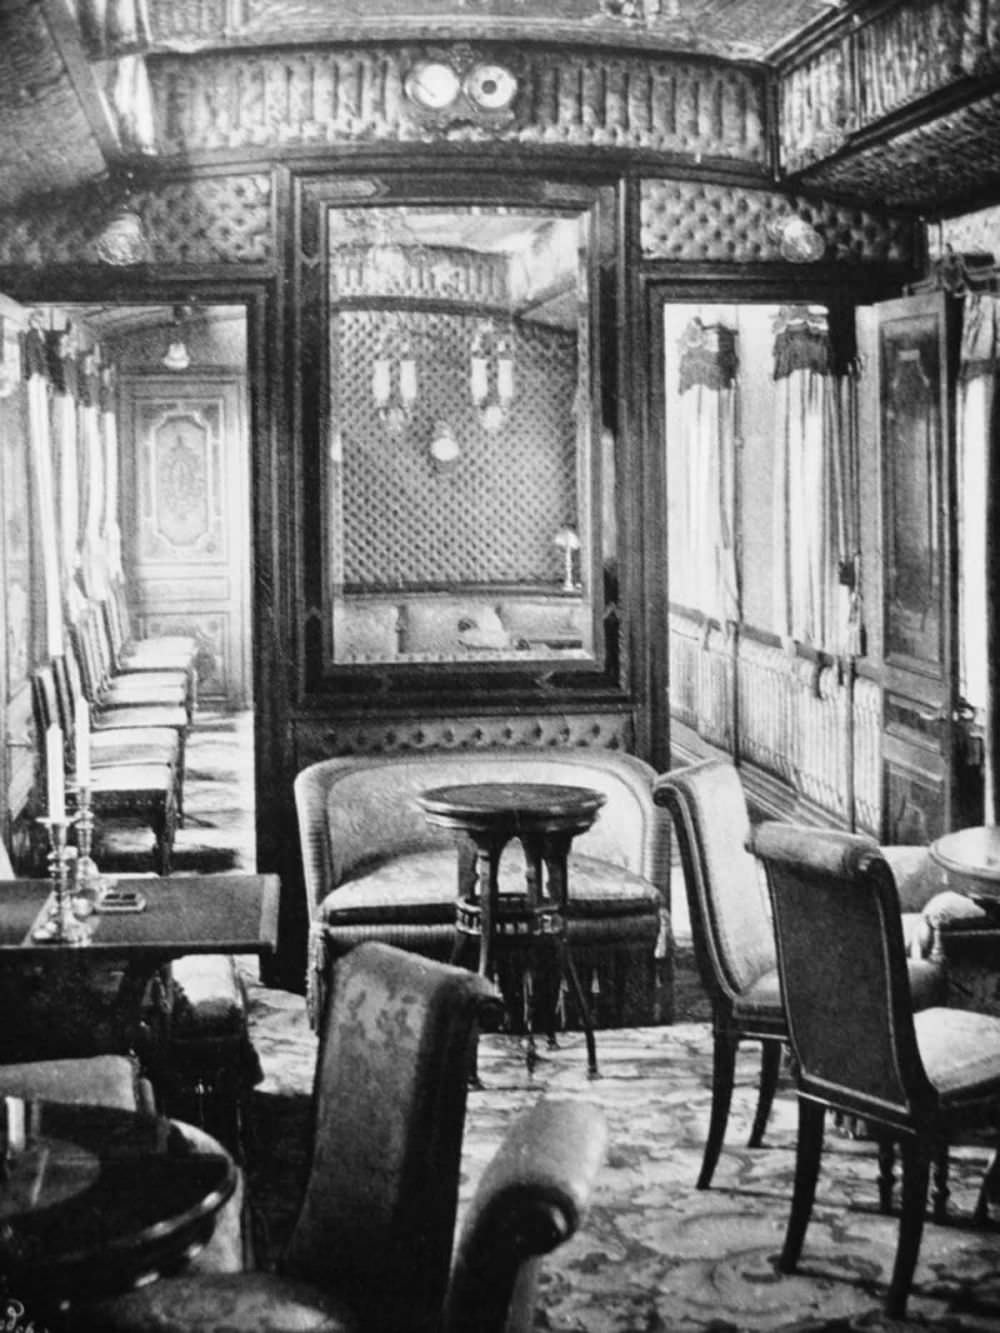 Inside the Romanov family train.